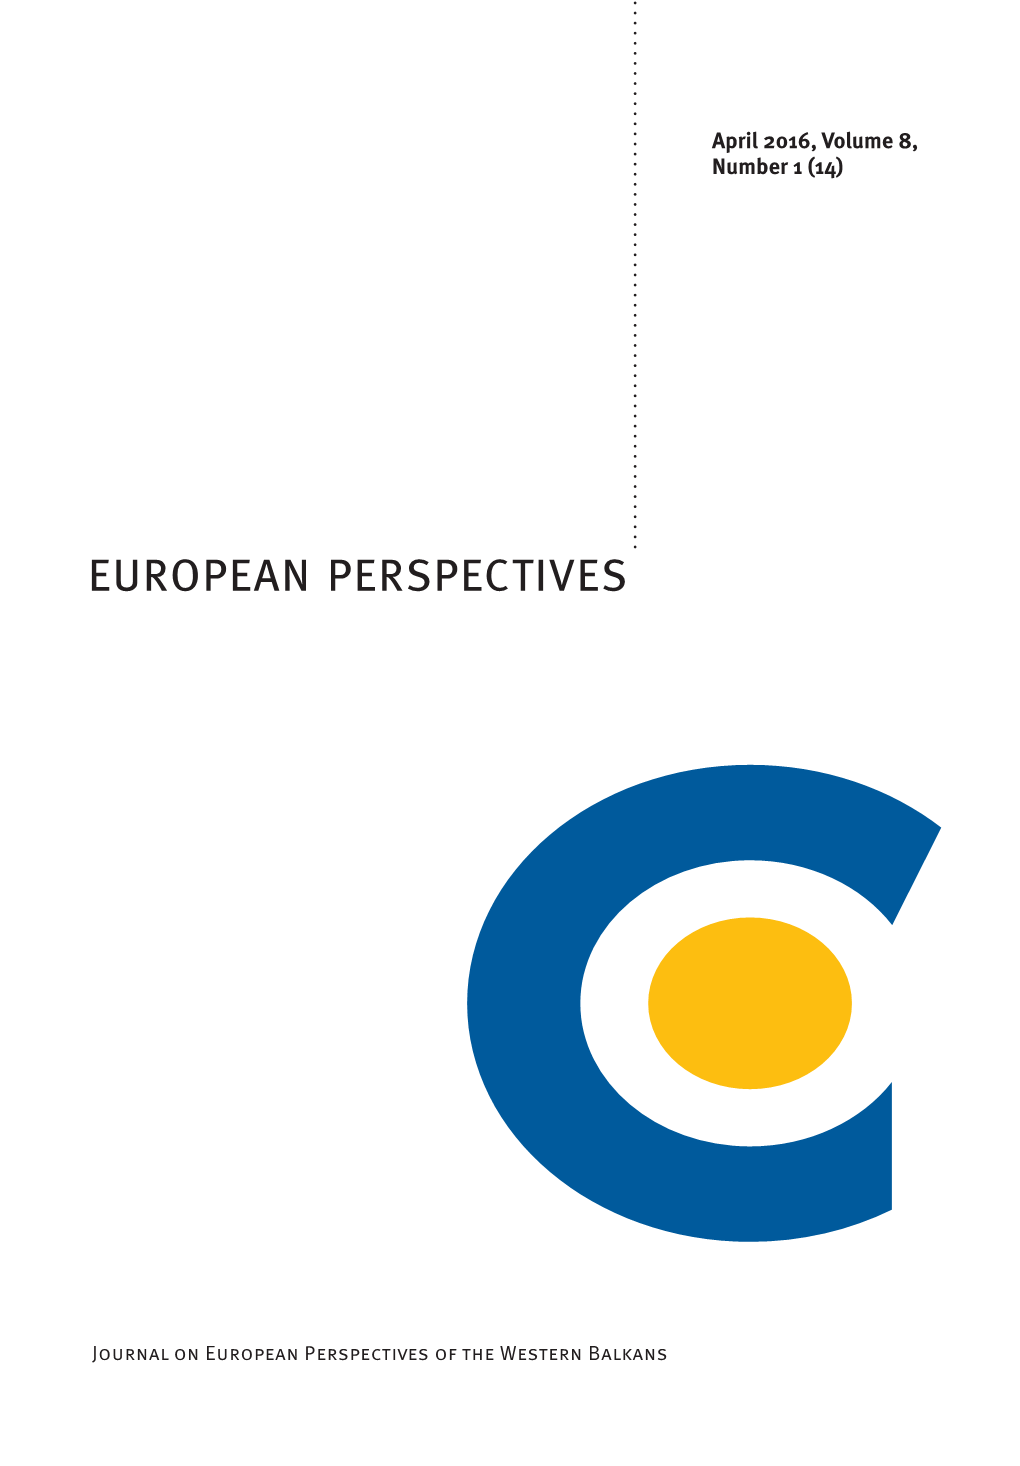 European Perspectives 2016, Volume 8, Number 1